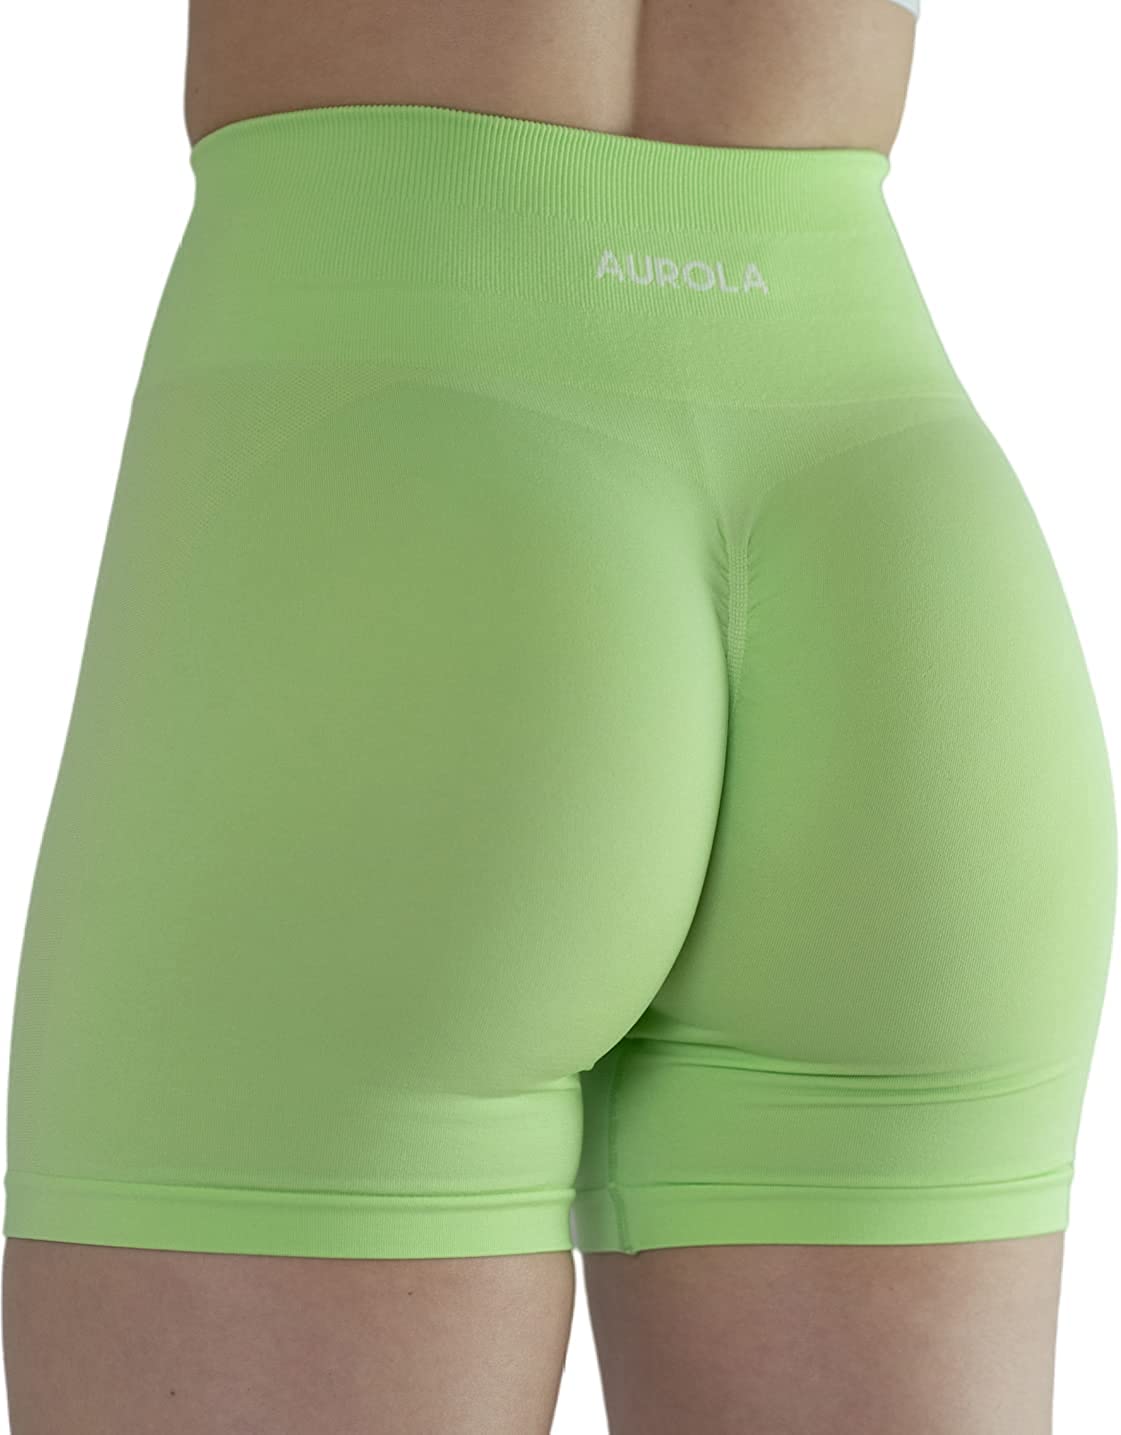  AUROLA Intensify Workout Shorts For Women Seamless